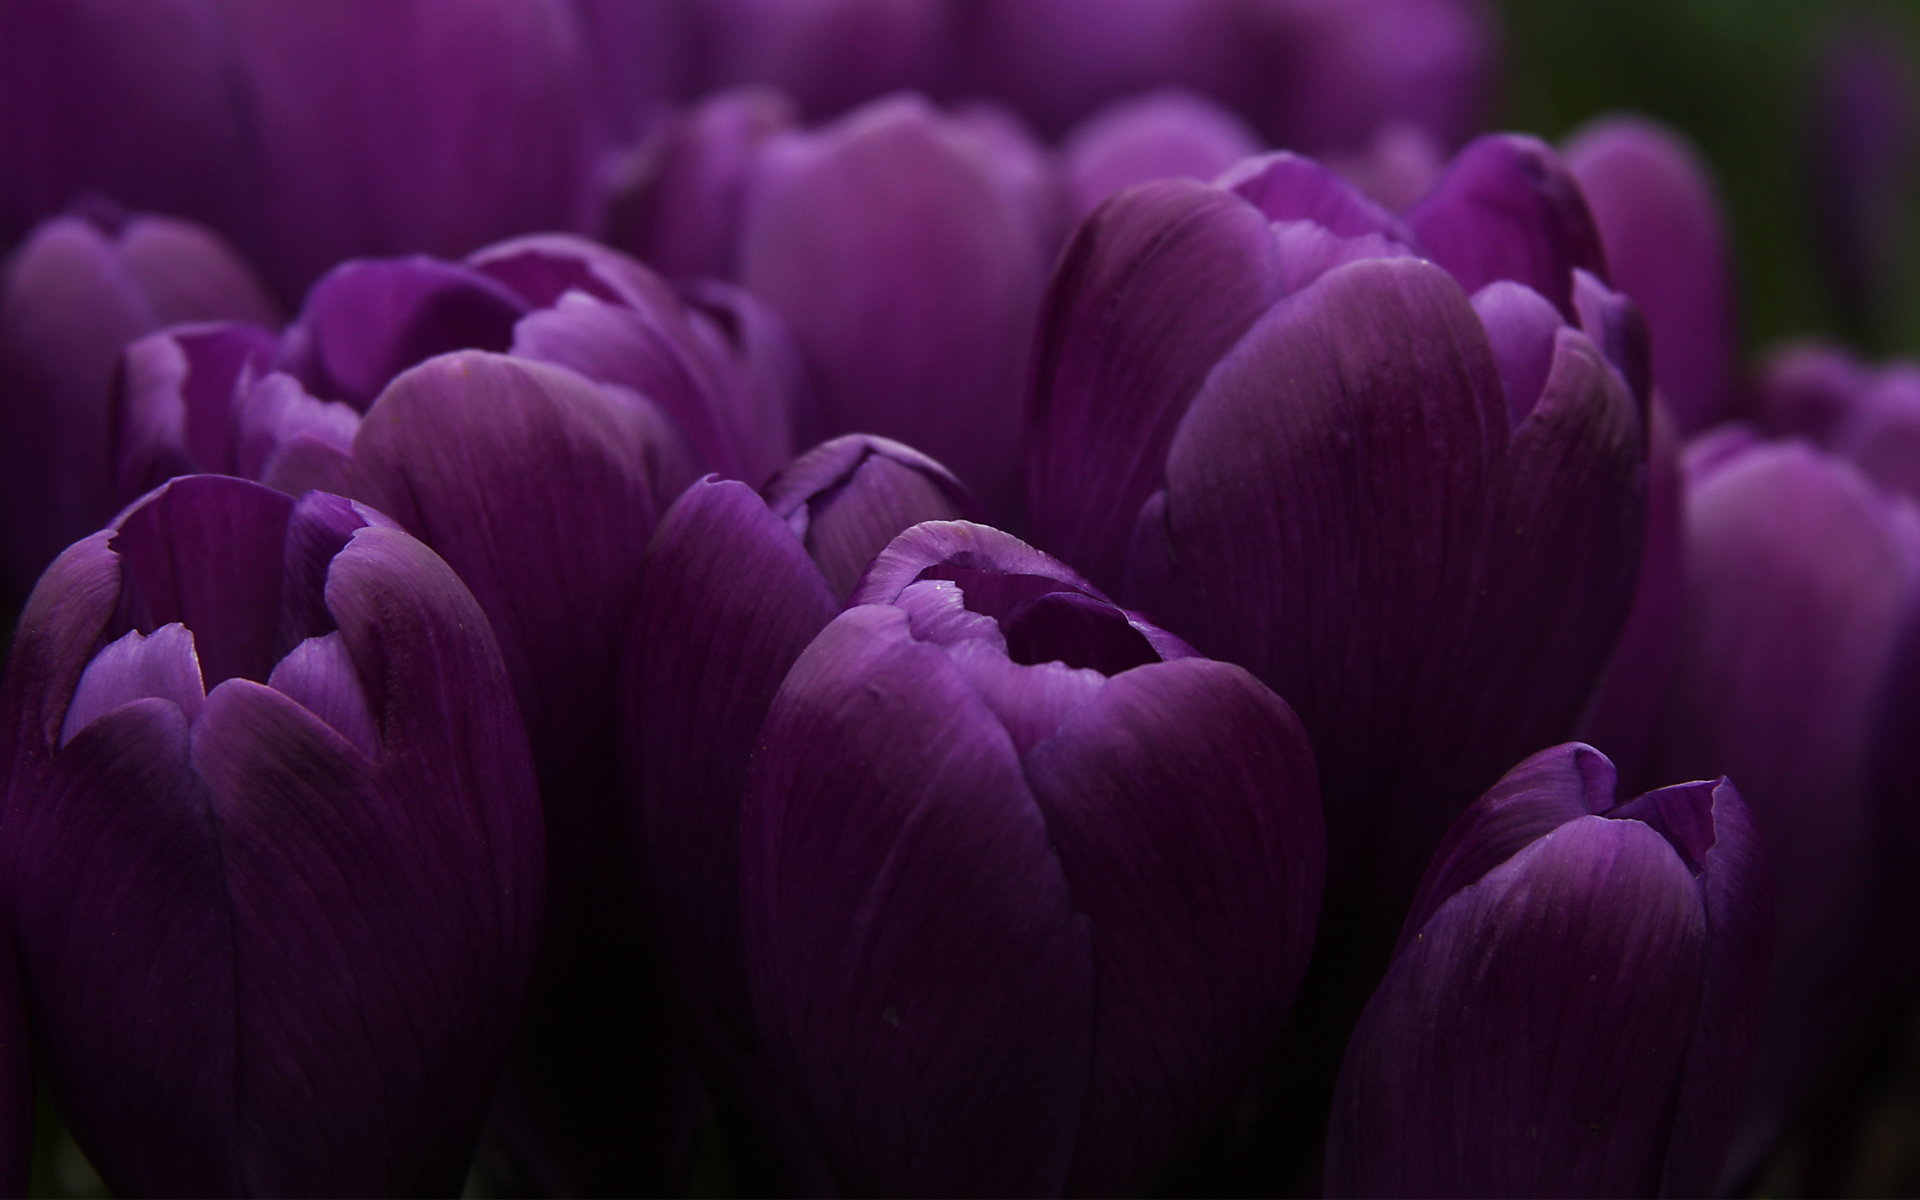 166576 descargar imagen tierra/naturaleza, tulipán, flor, flores: fondos de pantalla y protectores de pantalla gratis